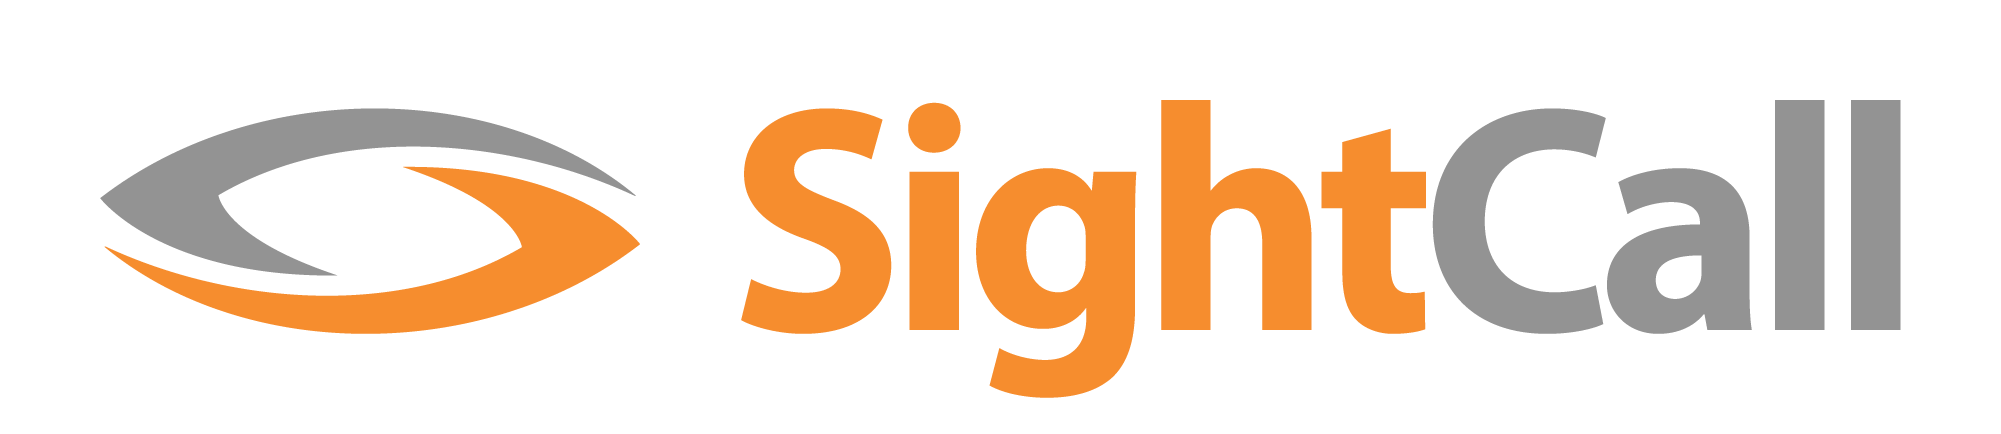 SightCall Logo Horz HD Color